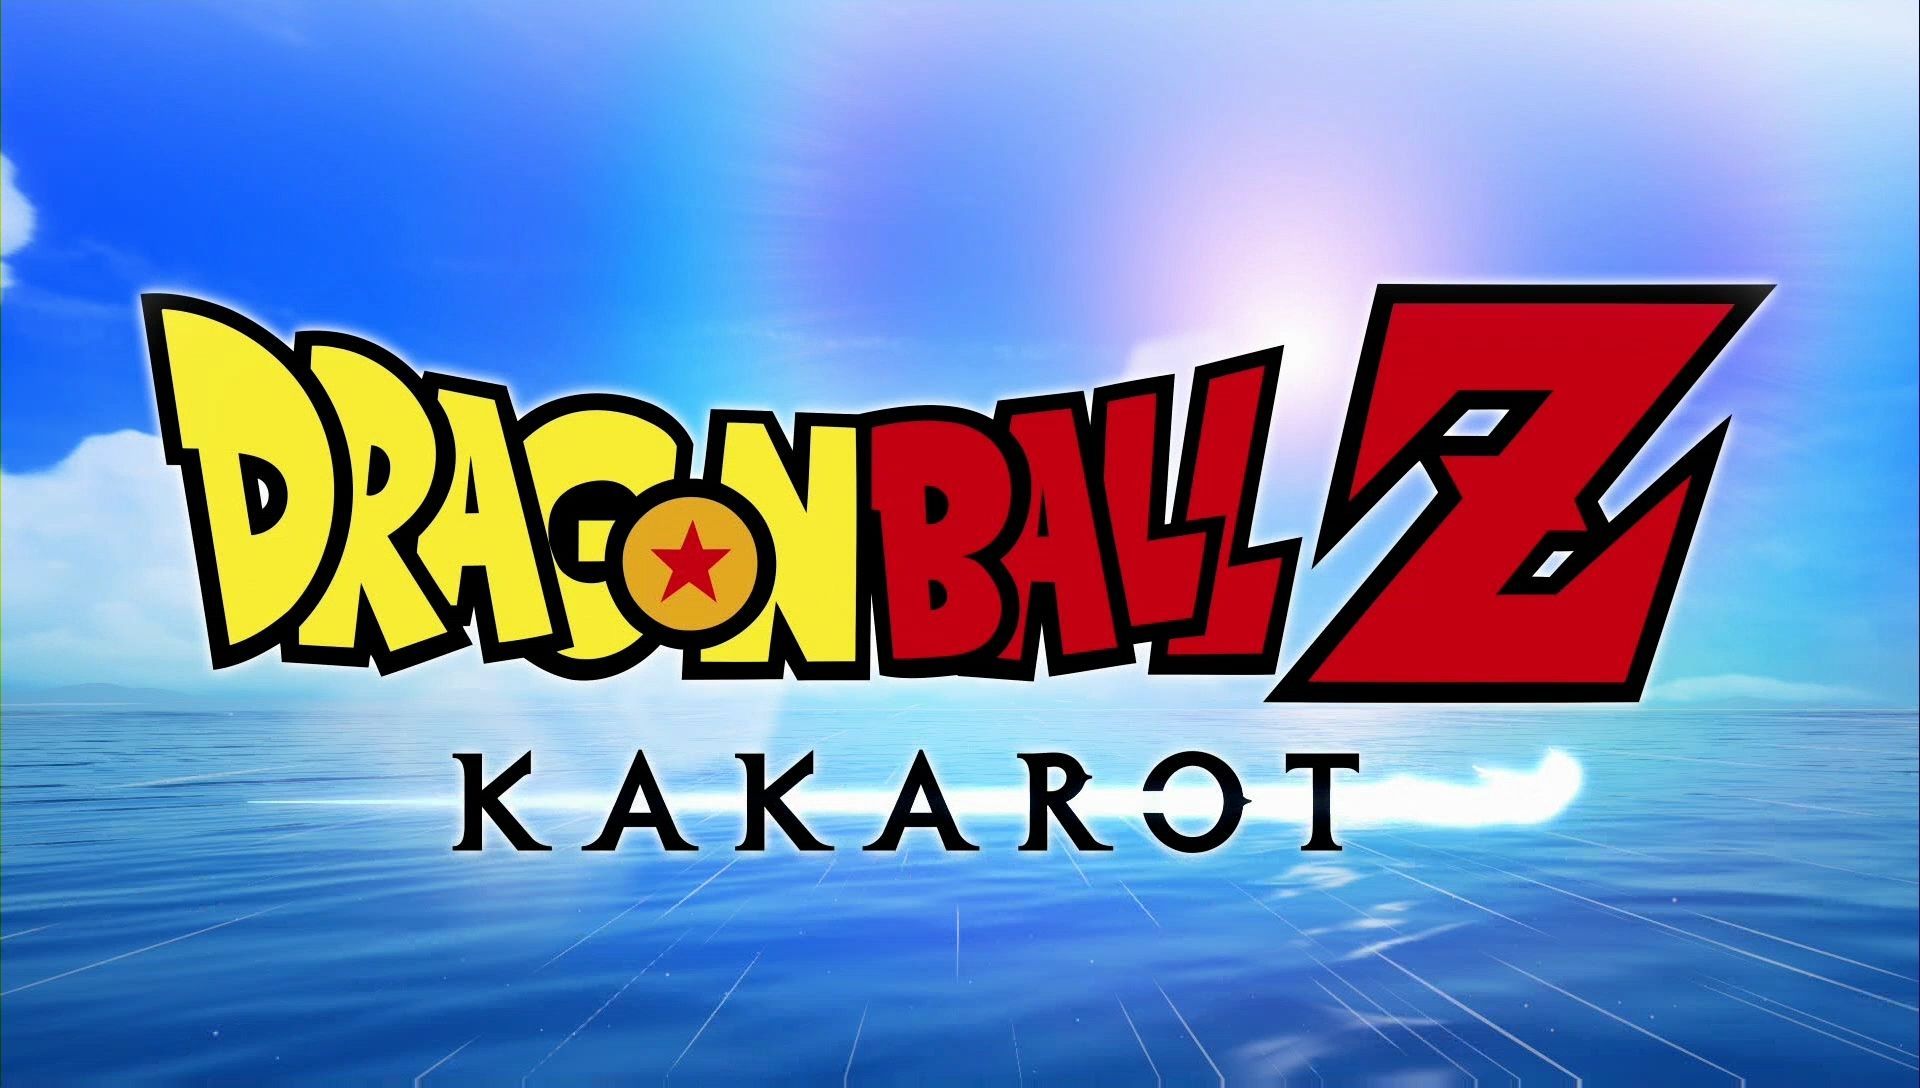 Historia al 100% en Dragon Ball Z: Kakarot